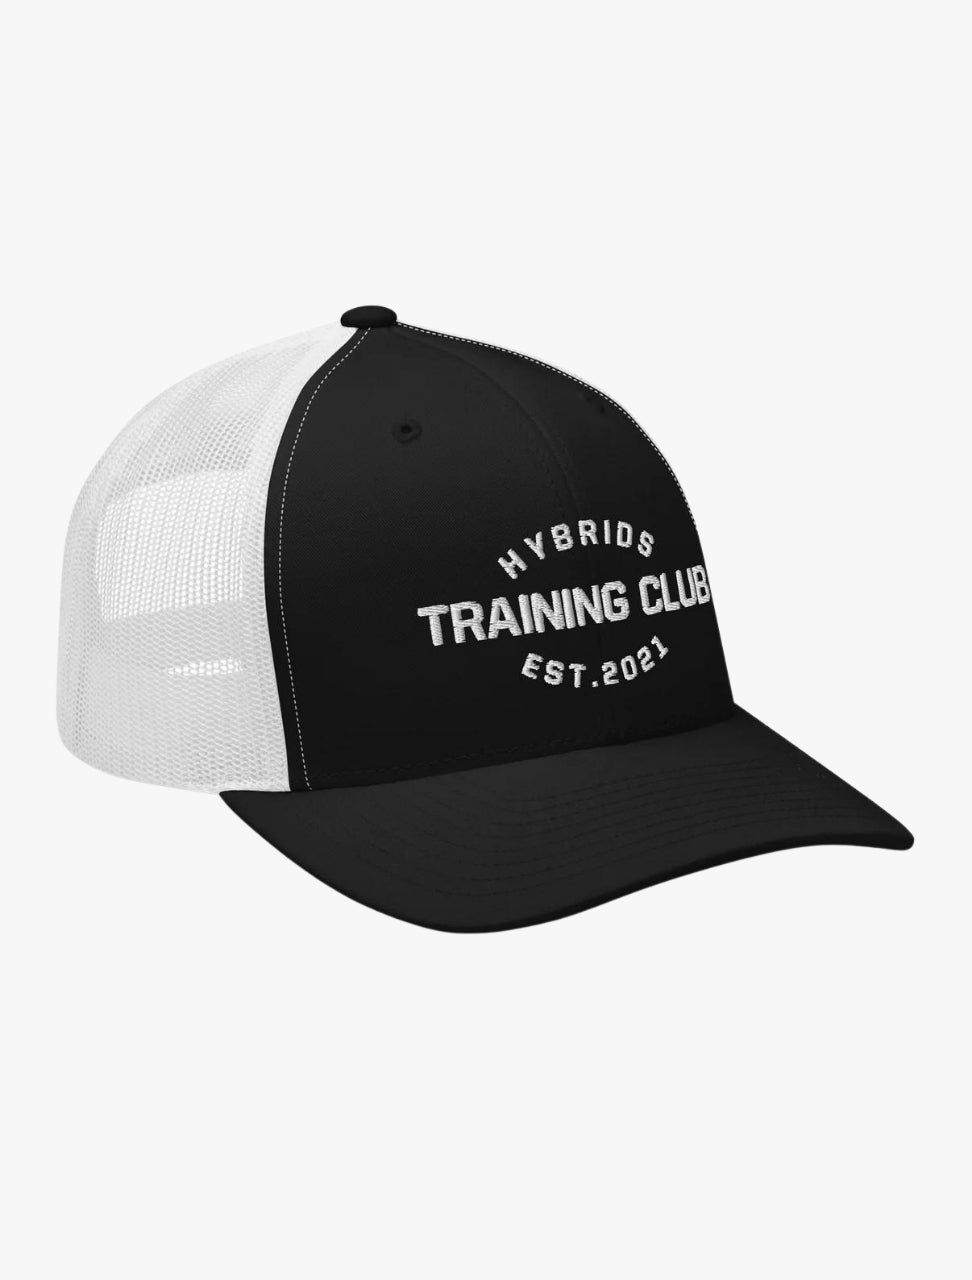 Trucker Hat Hybrids Training Club Est. 21 Black